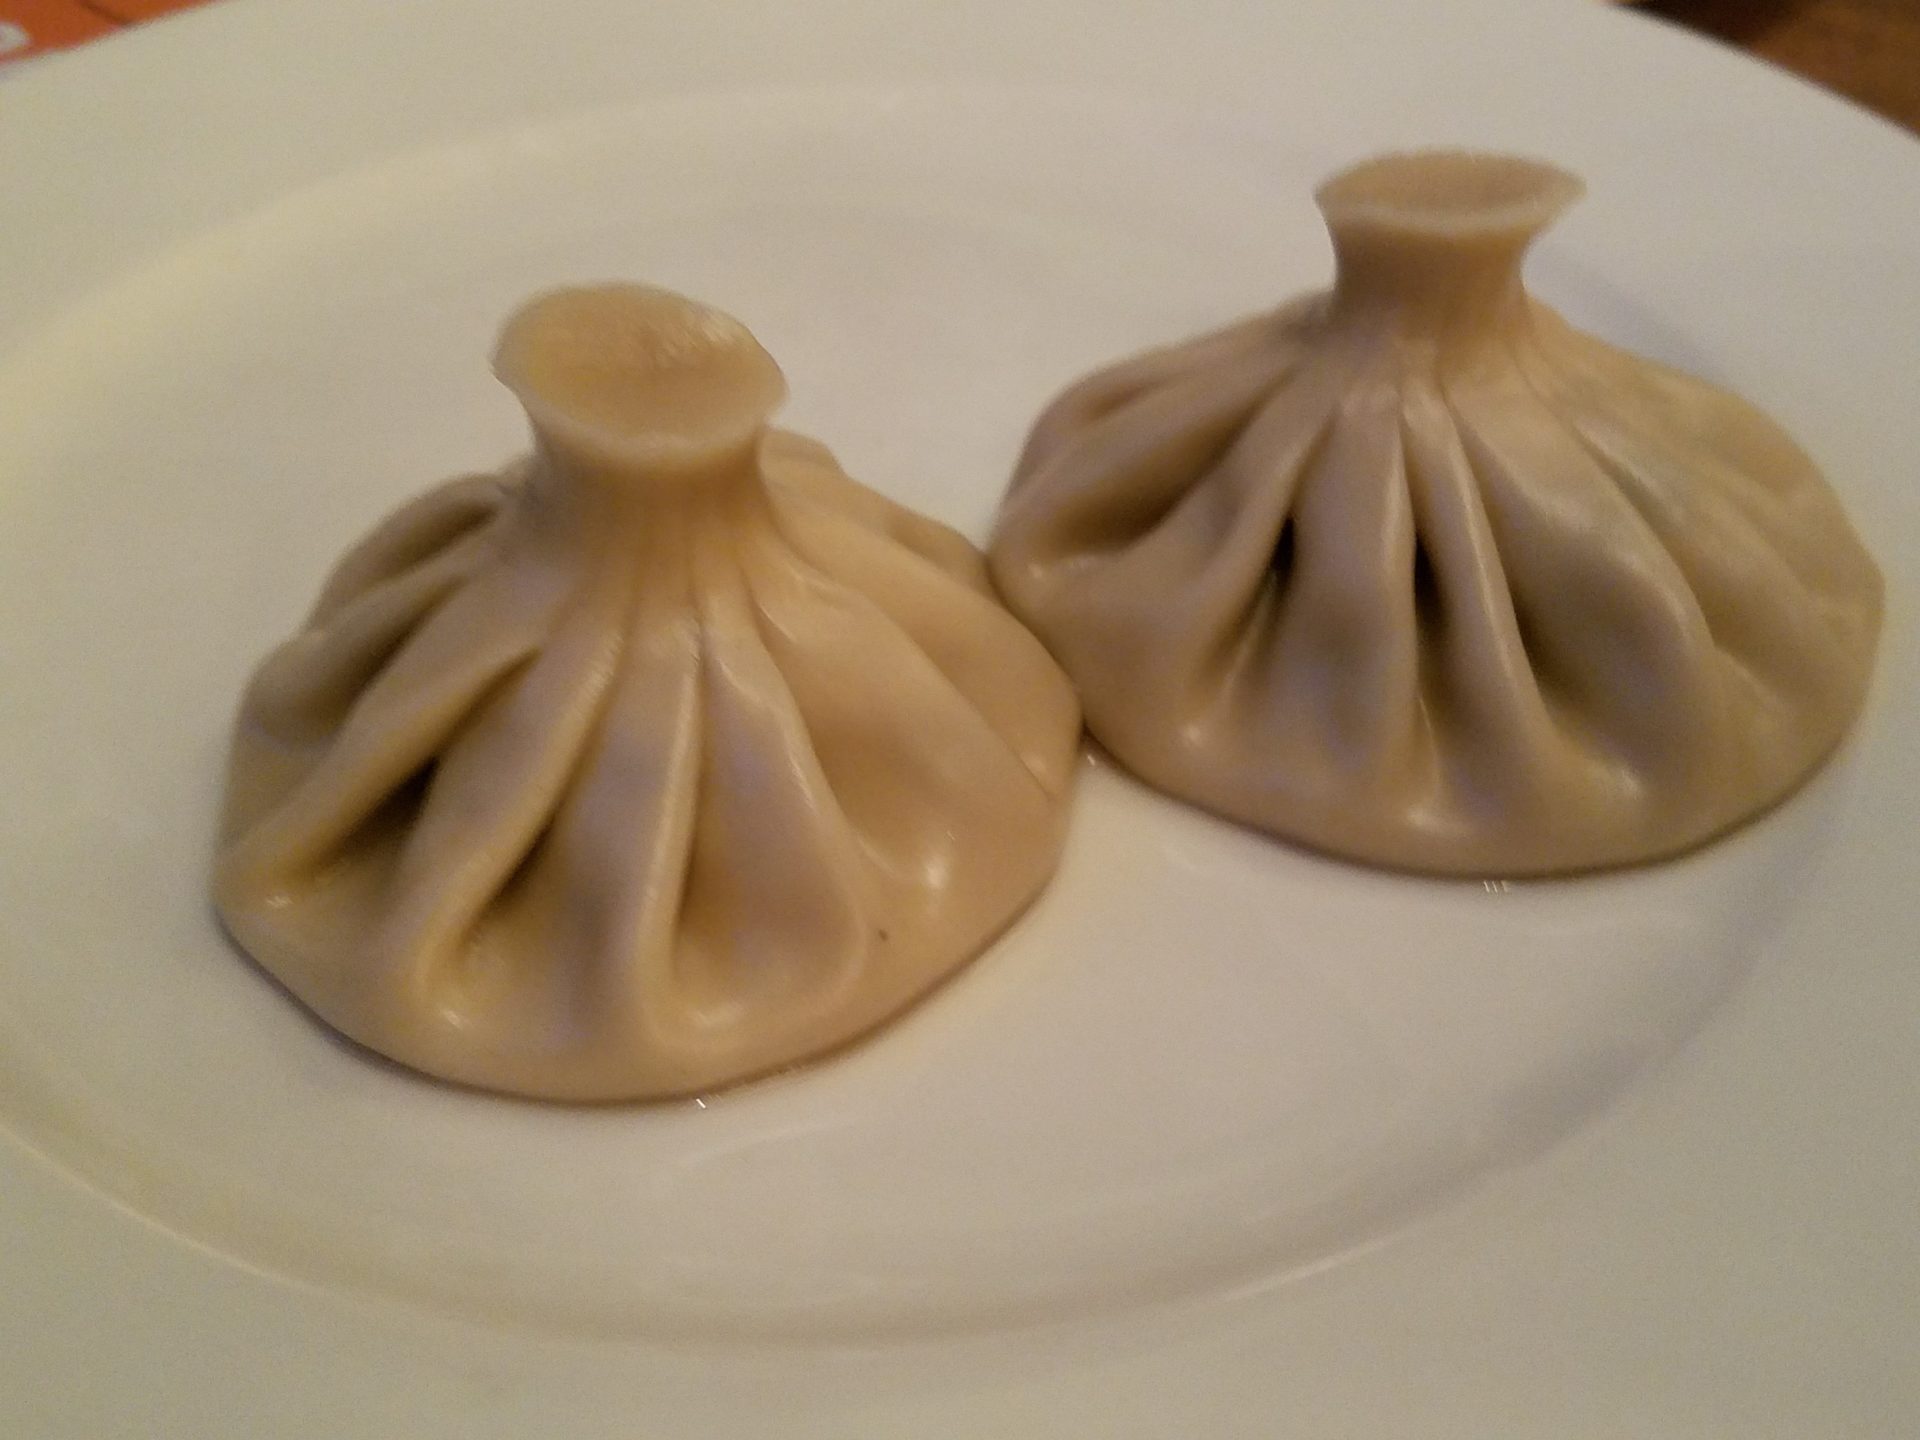 a pair of dumplings on a plate